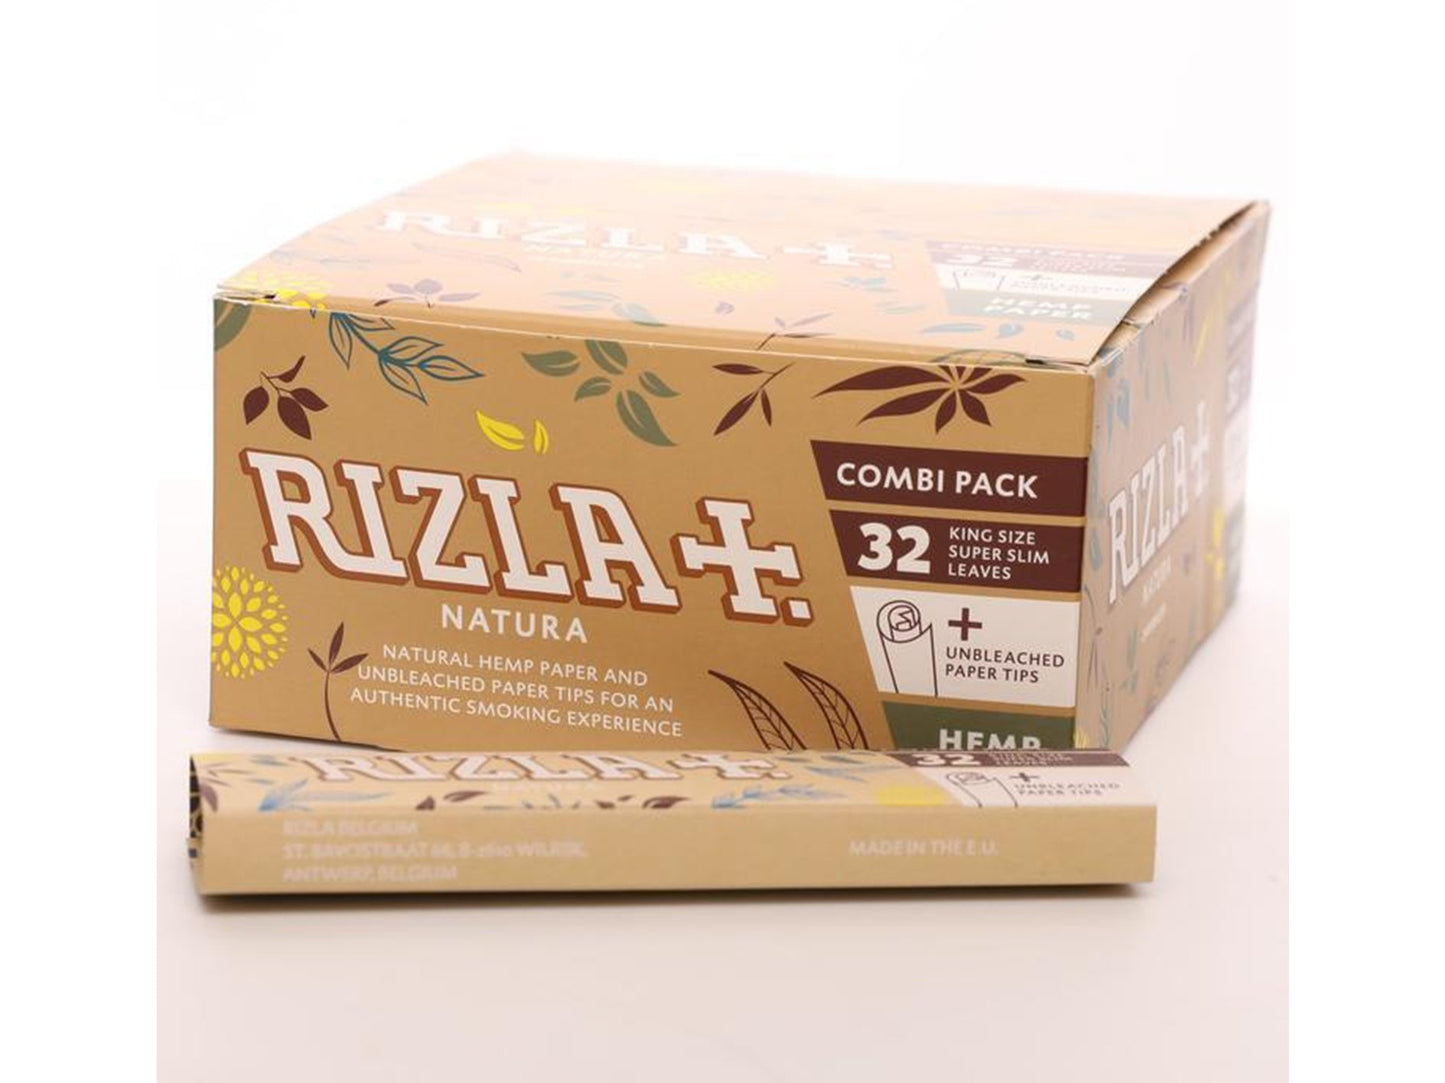 RIZLA Natural Combi King Size - VIR Wholesale